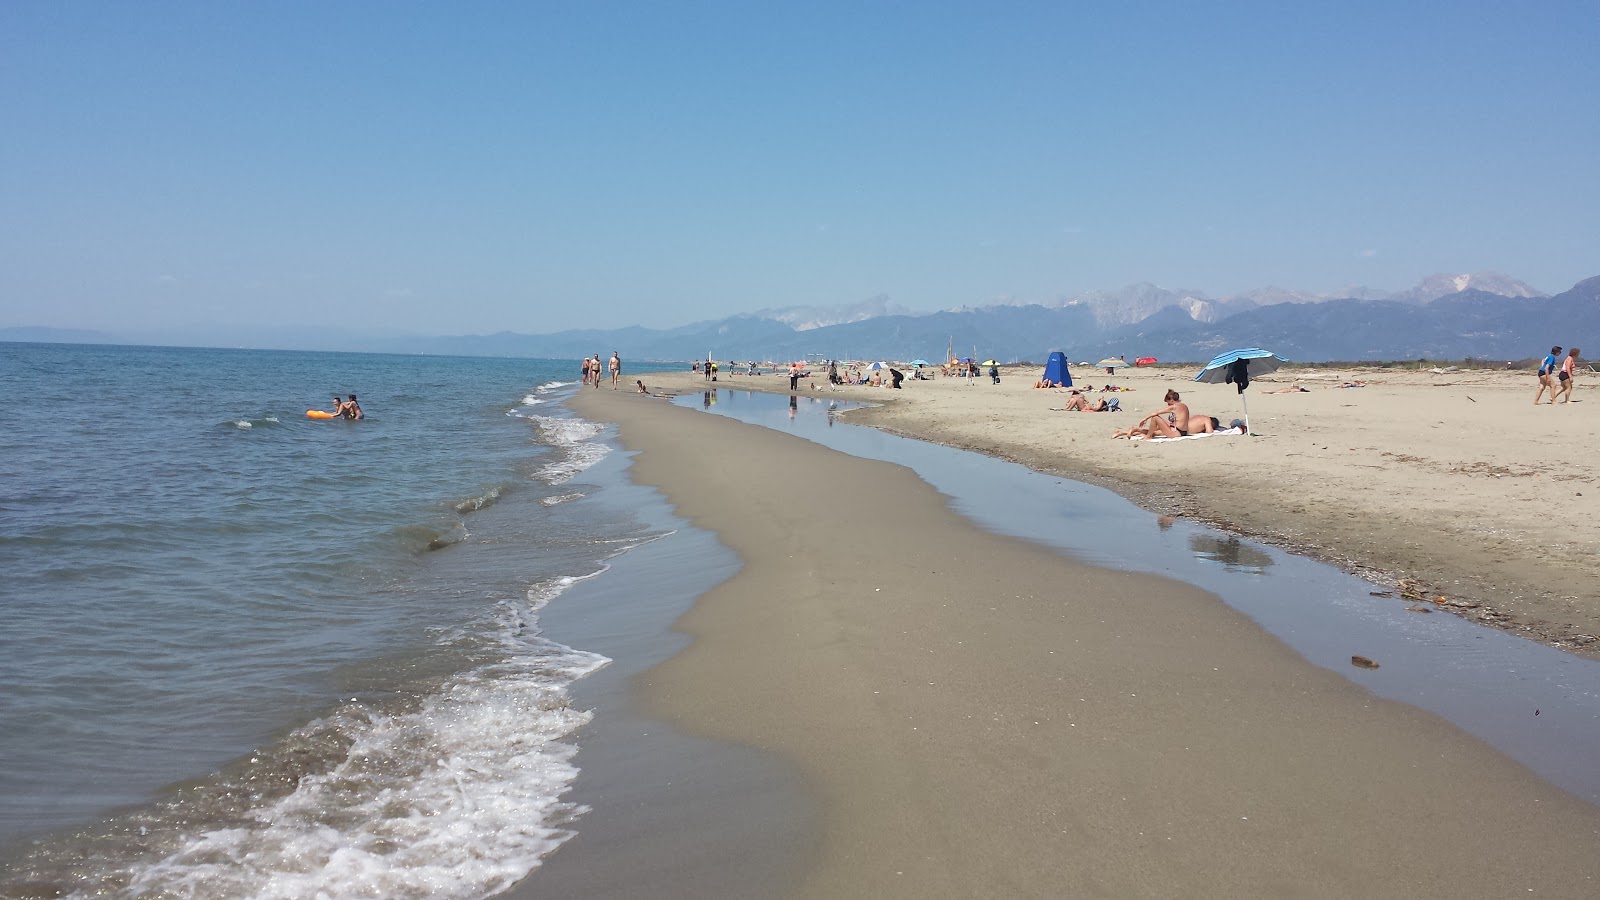 Fotografie cu Spiaggia della Lecciona cu o suprafață de apa albastra